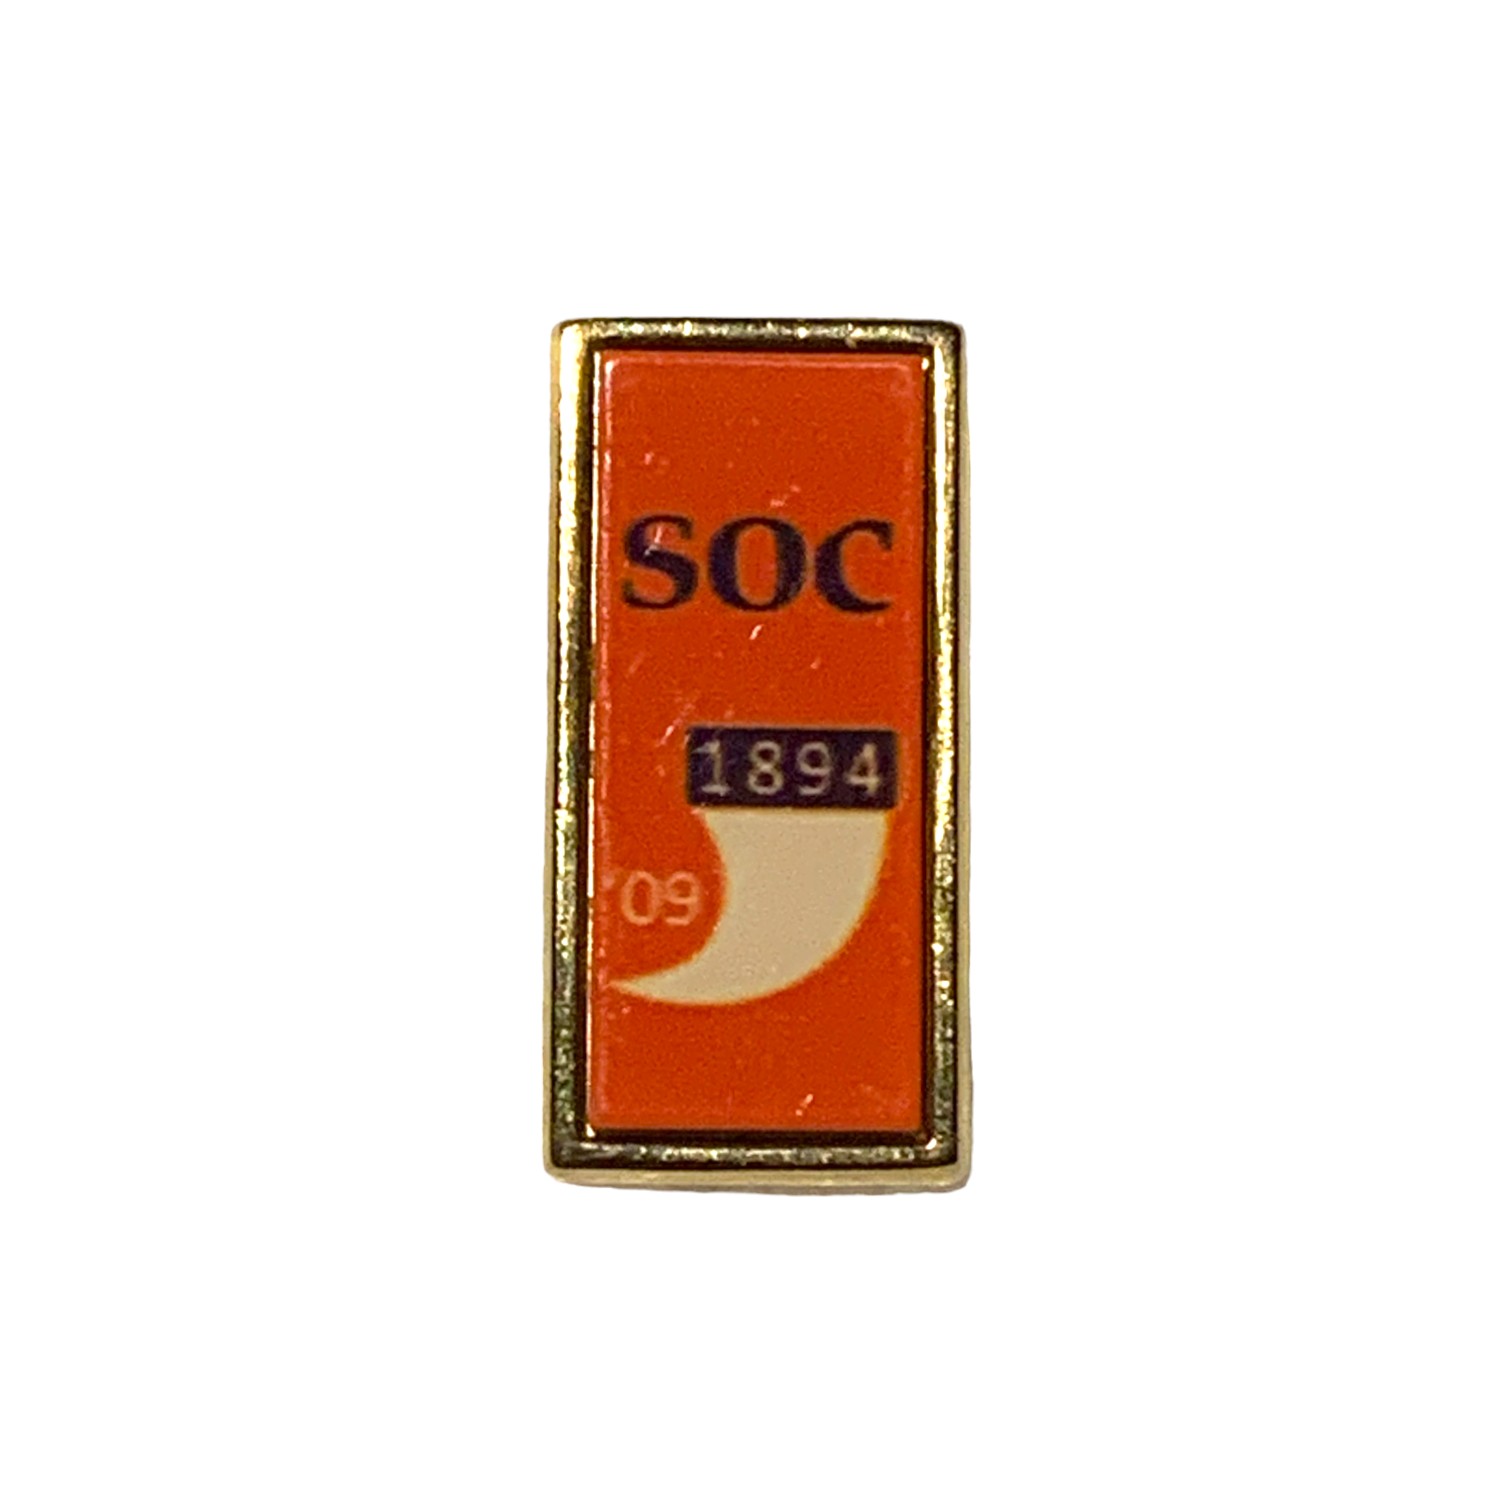 Society of the Claw (SOC) Pin